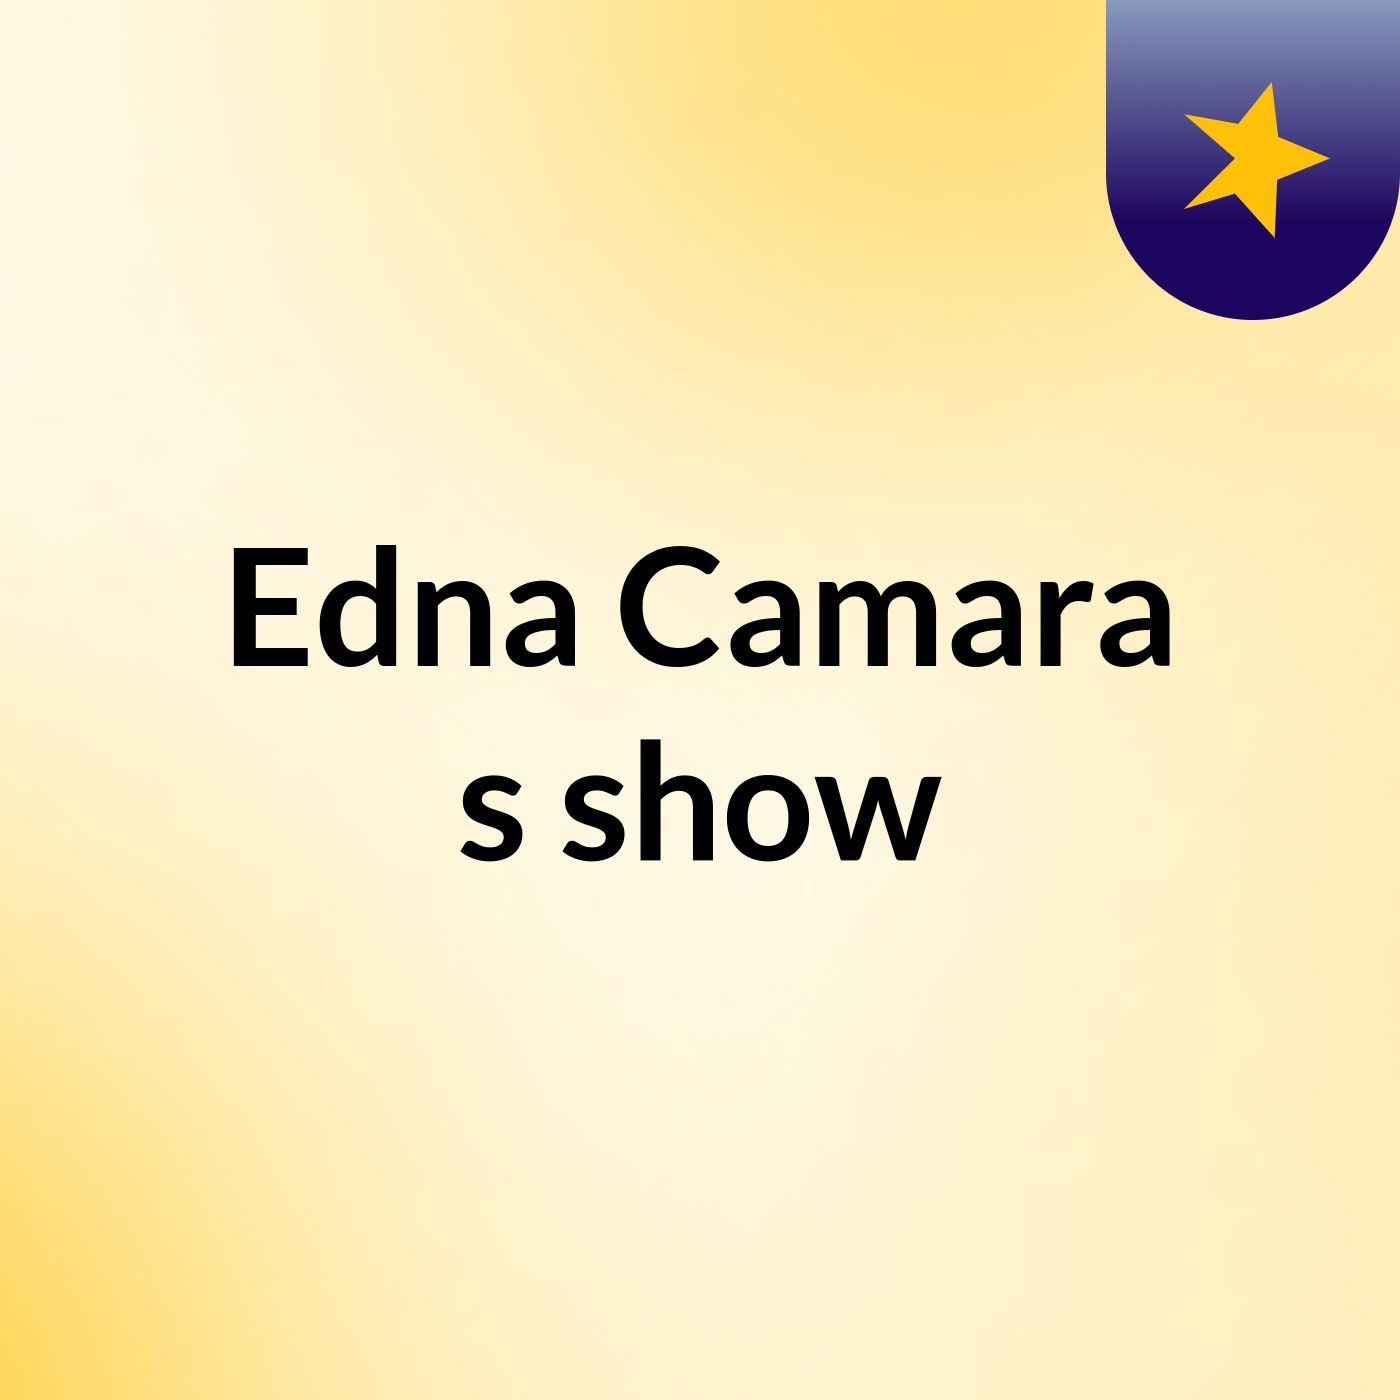 Edna Camara's show